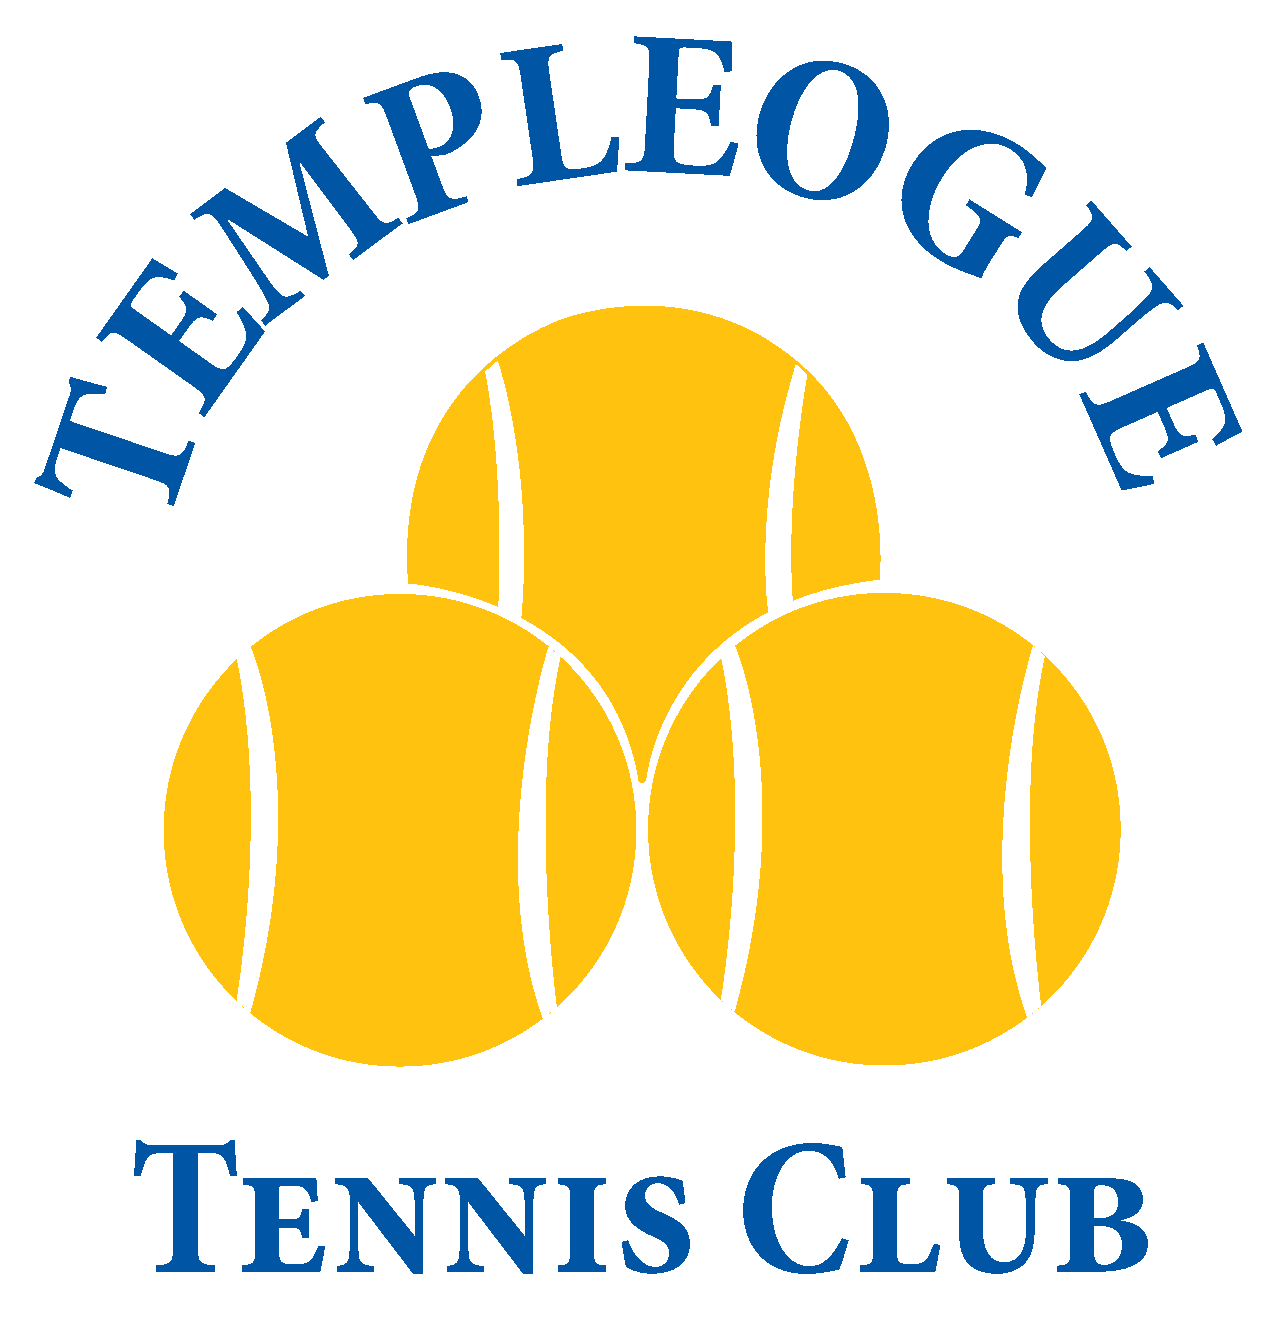 Templeogue Tennis Club Logo Copy